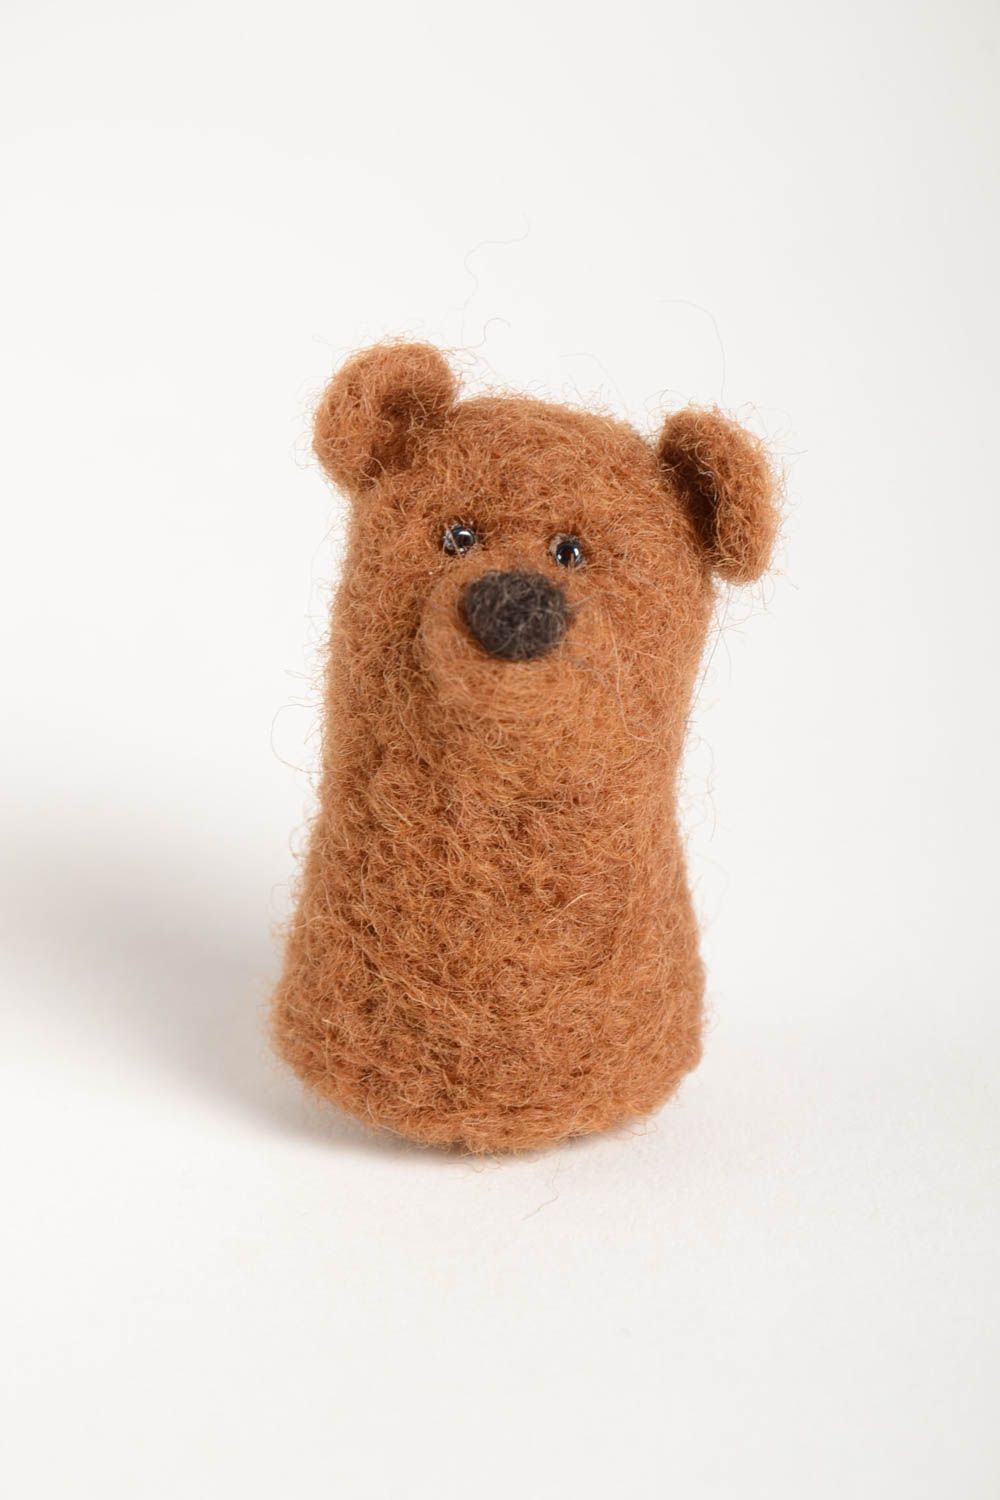 Handmade felted wool toy soft toy for kids needle felting interior decorating photo 5